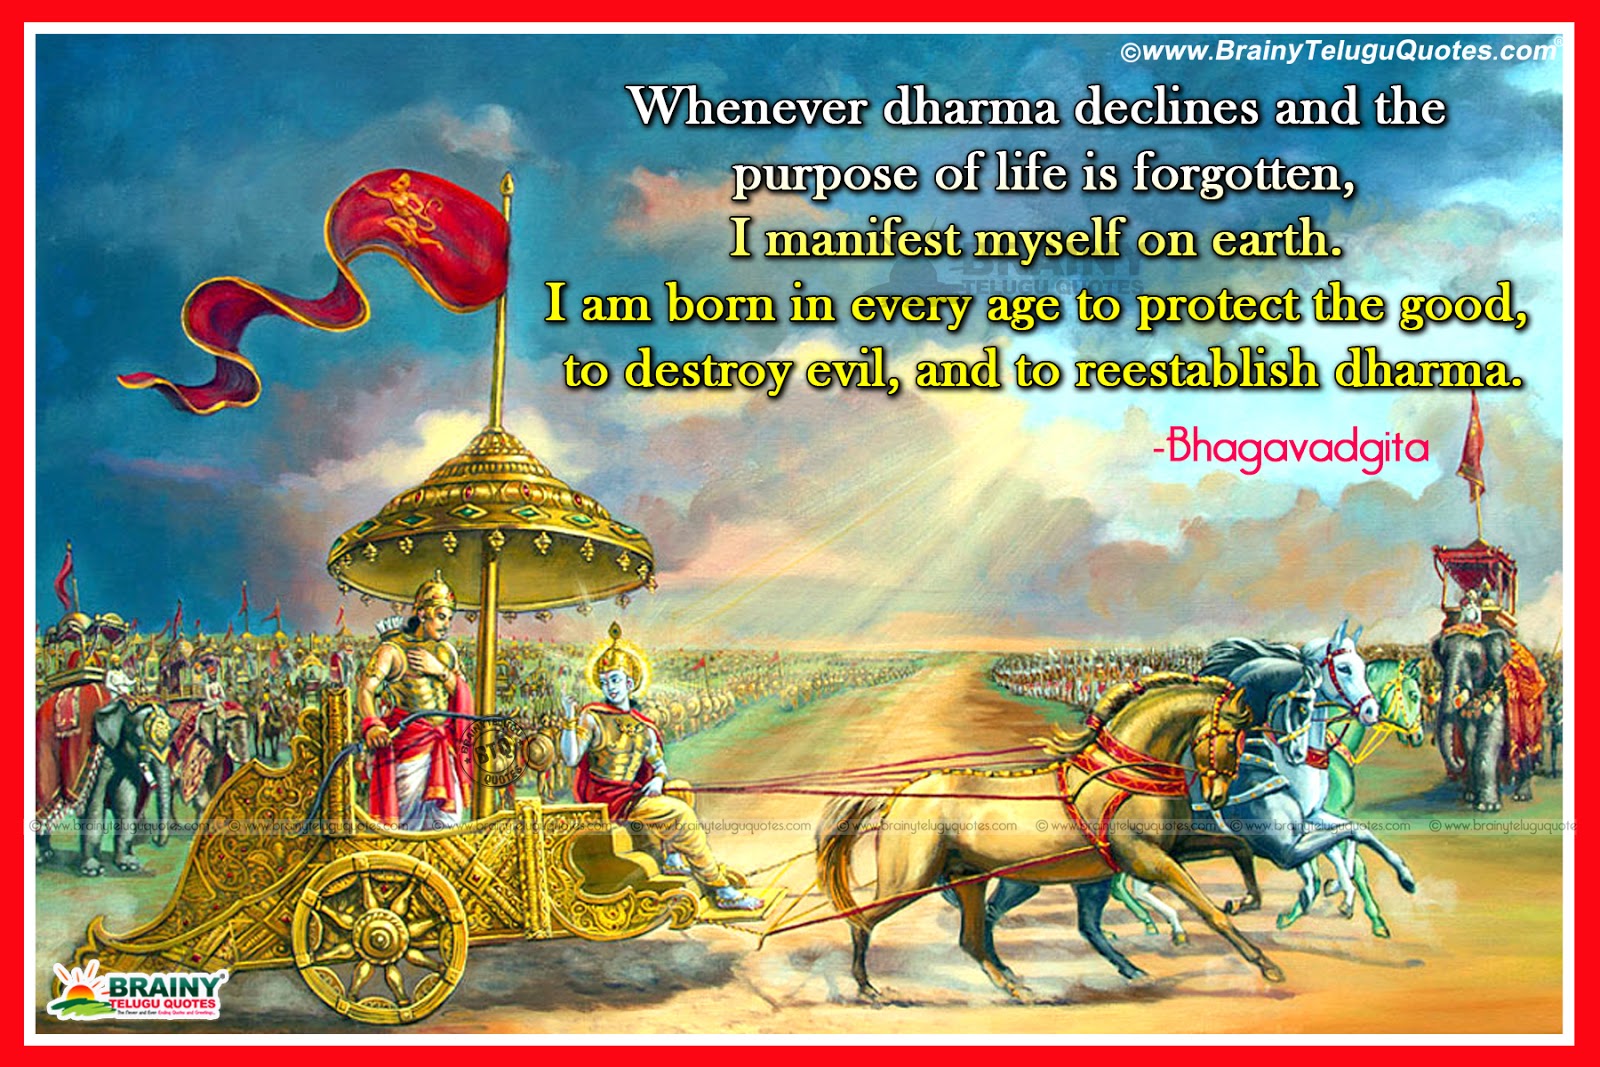 Famous Bhagavad Gita Quotations In English